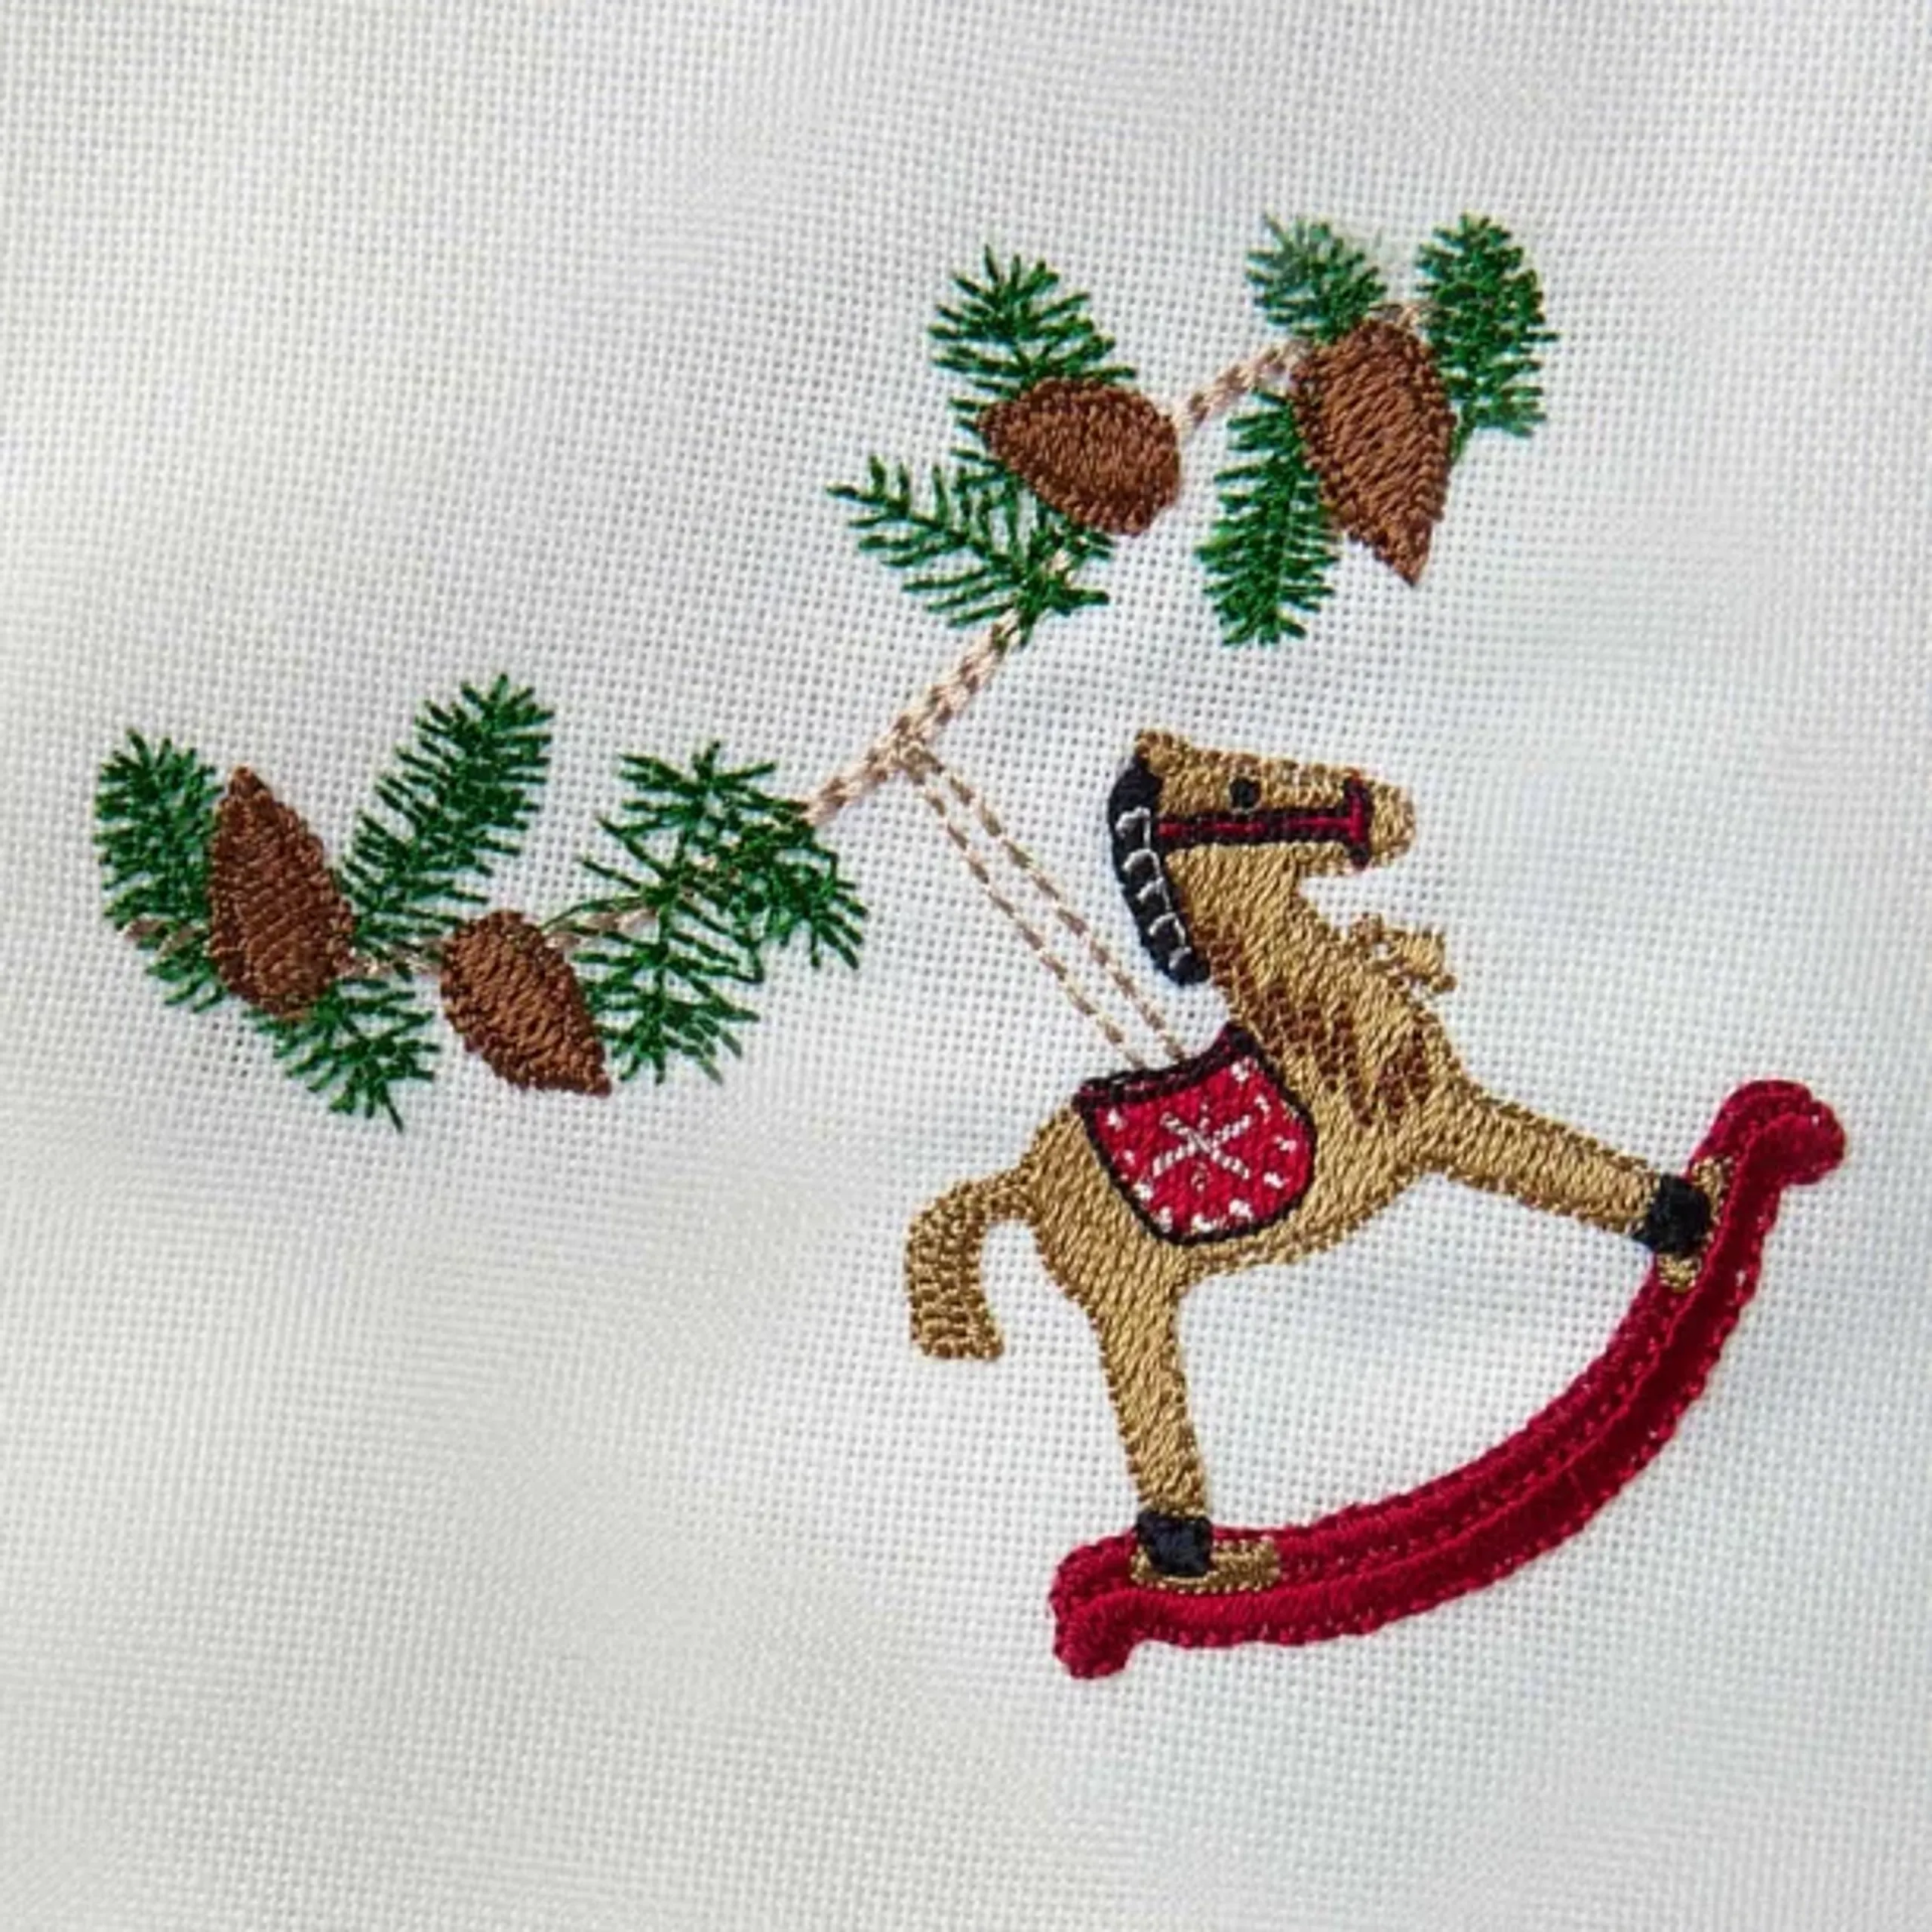 Langkilde & Søn - Stoffservietten - Christmas napkin - Rocking horse